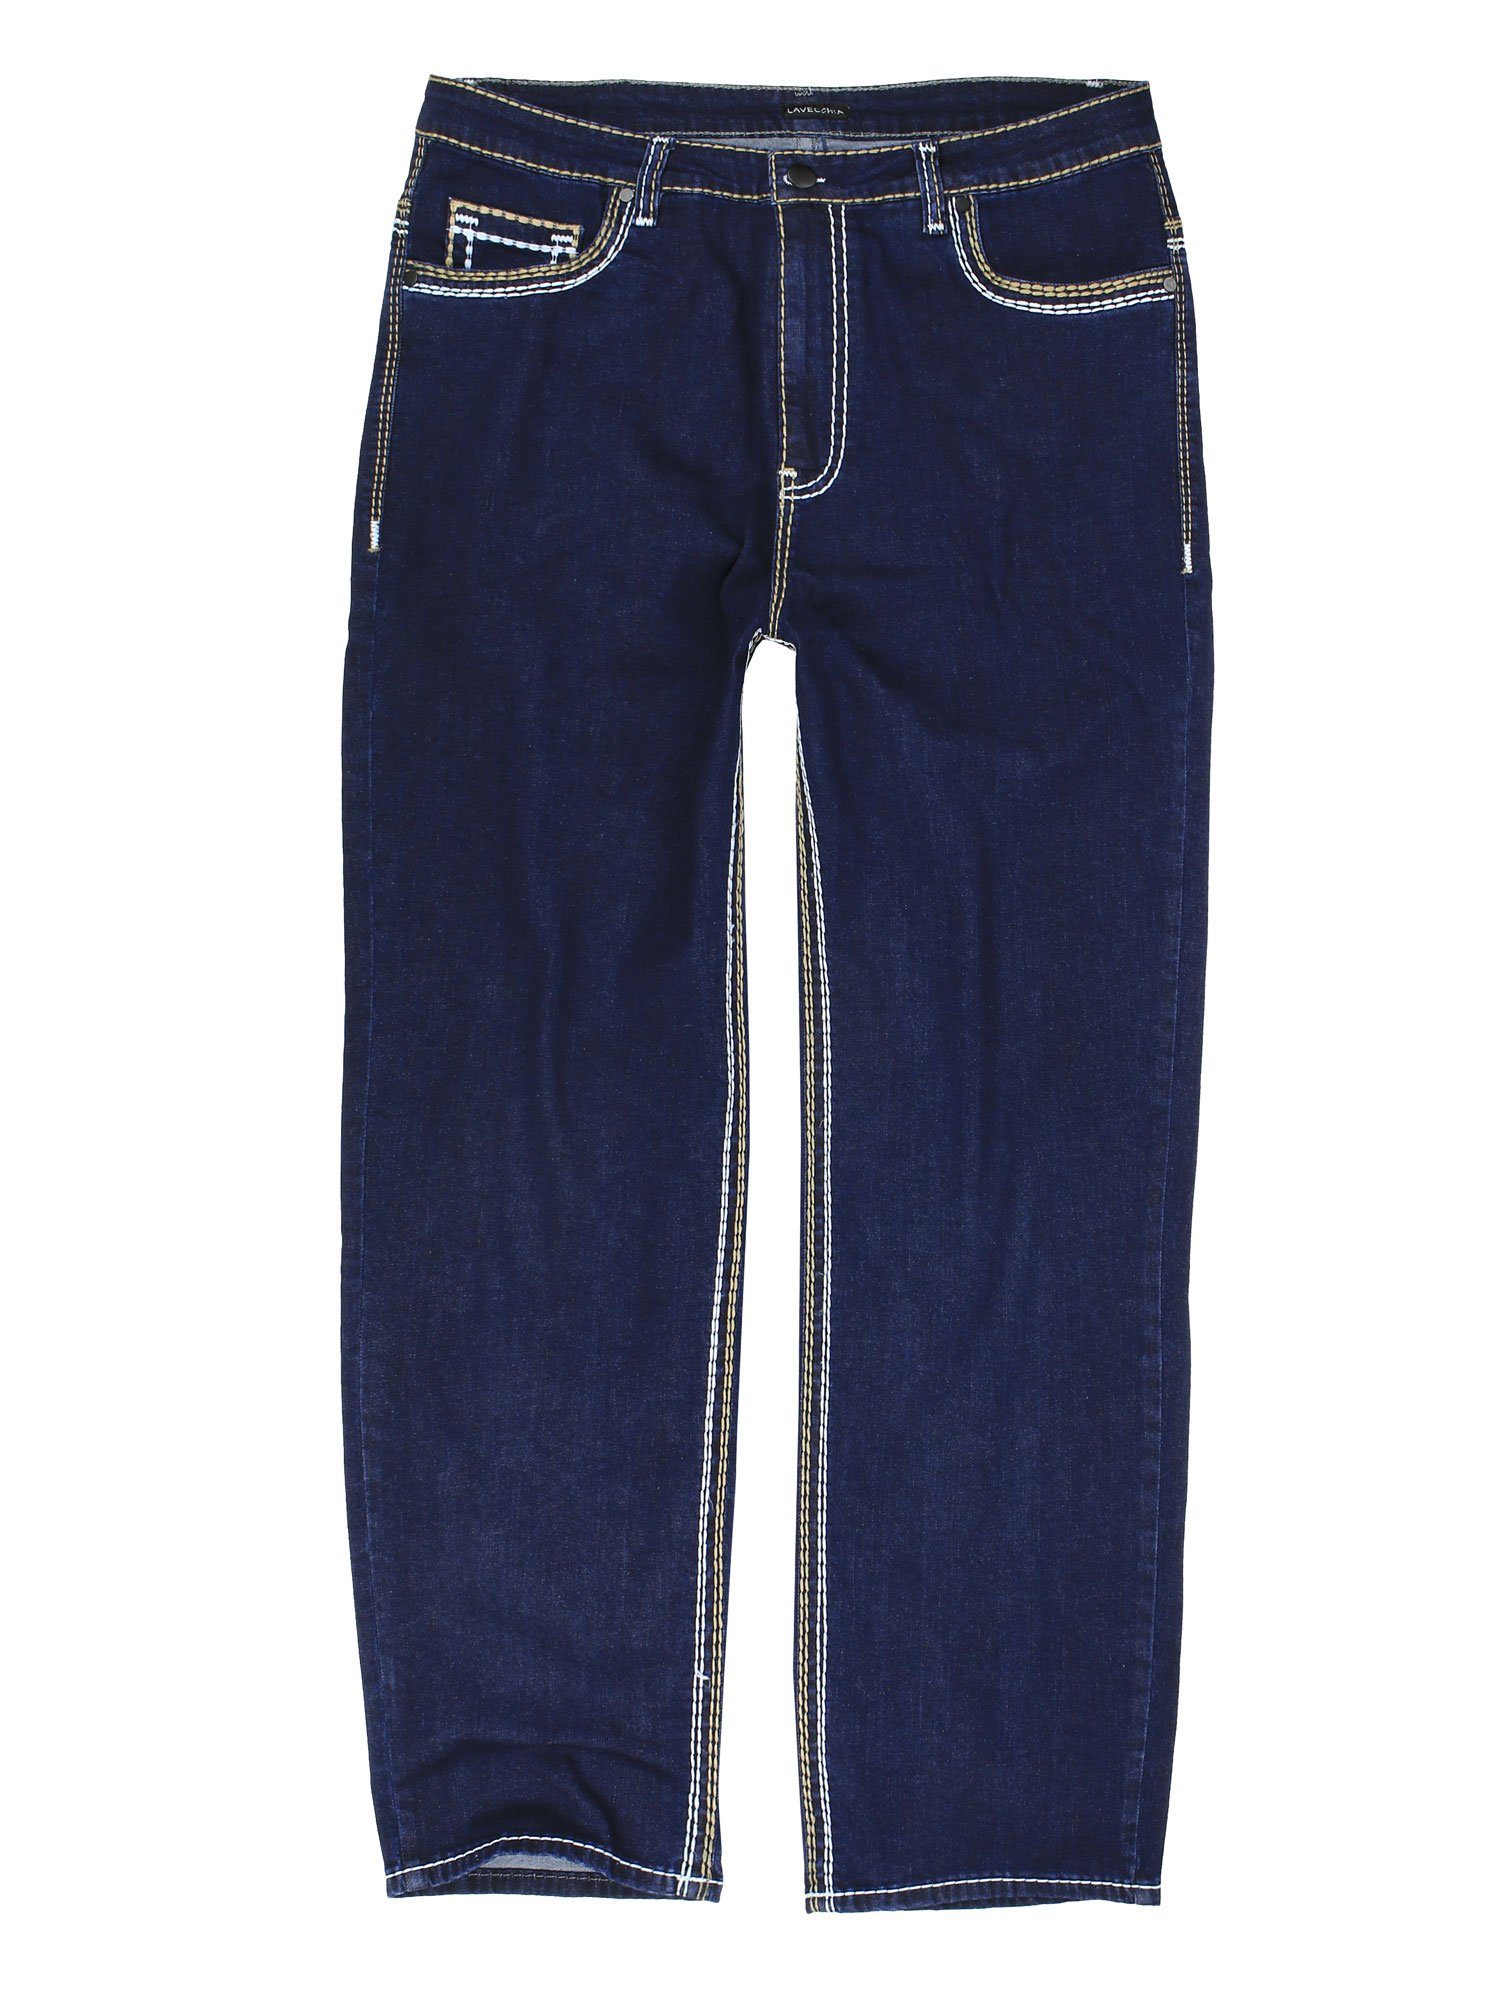 Comfort-fit-Jeans Naht dicker Übergrößen dunkelblau Herren Stretch Elasthan Jeanshose mit & LV-503 Lavecchia